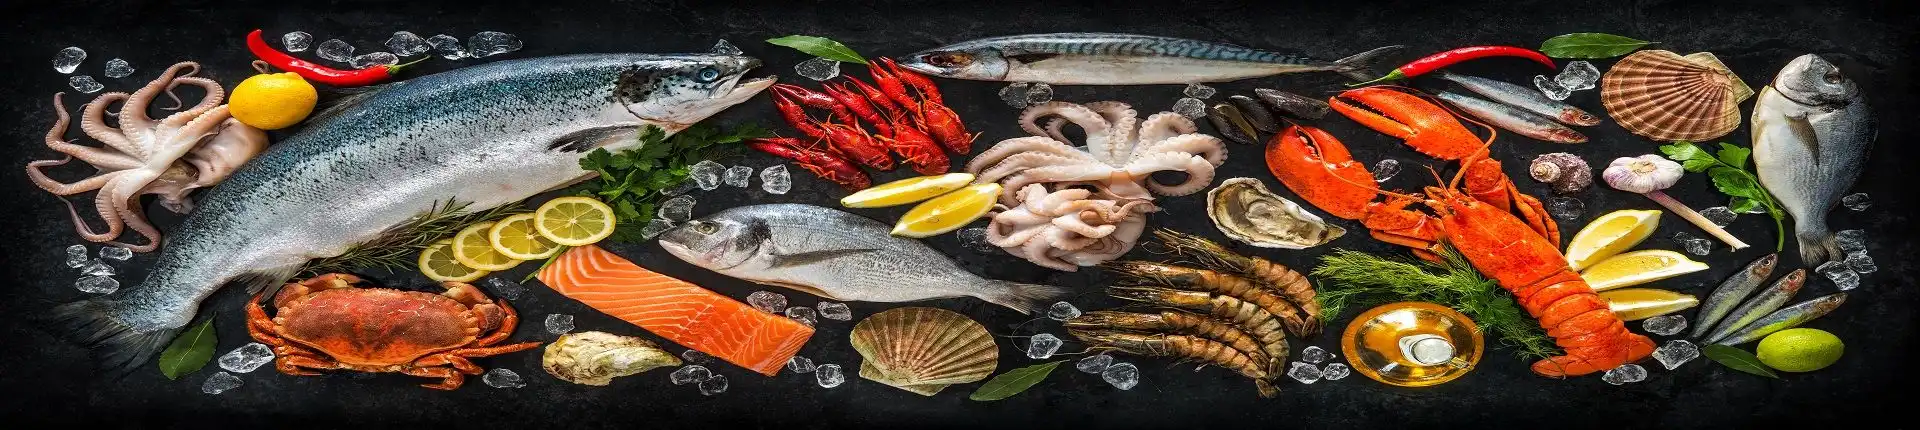 10 Best Seafood Restaurants in Dubai